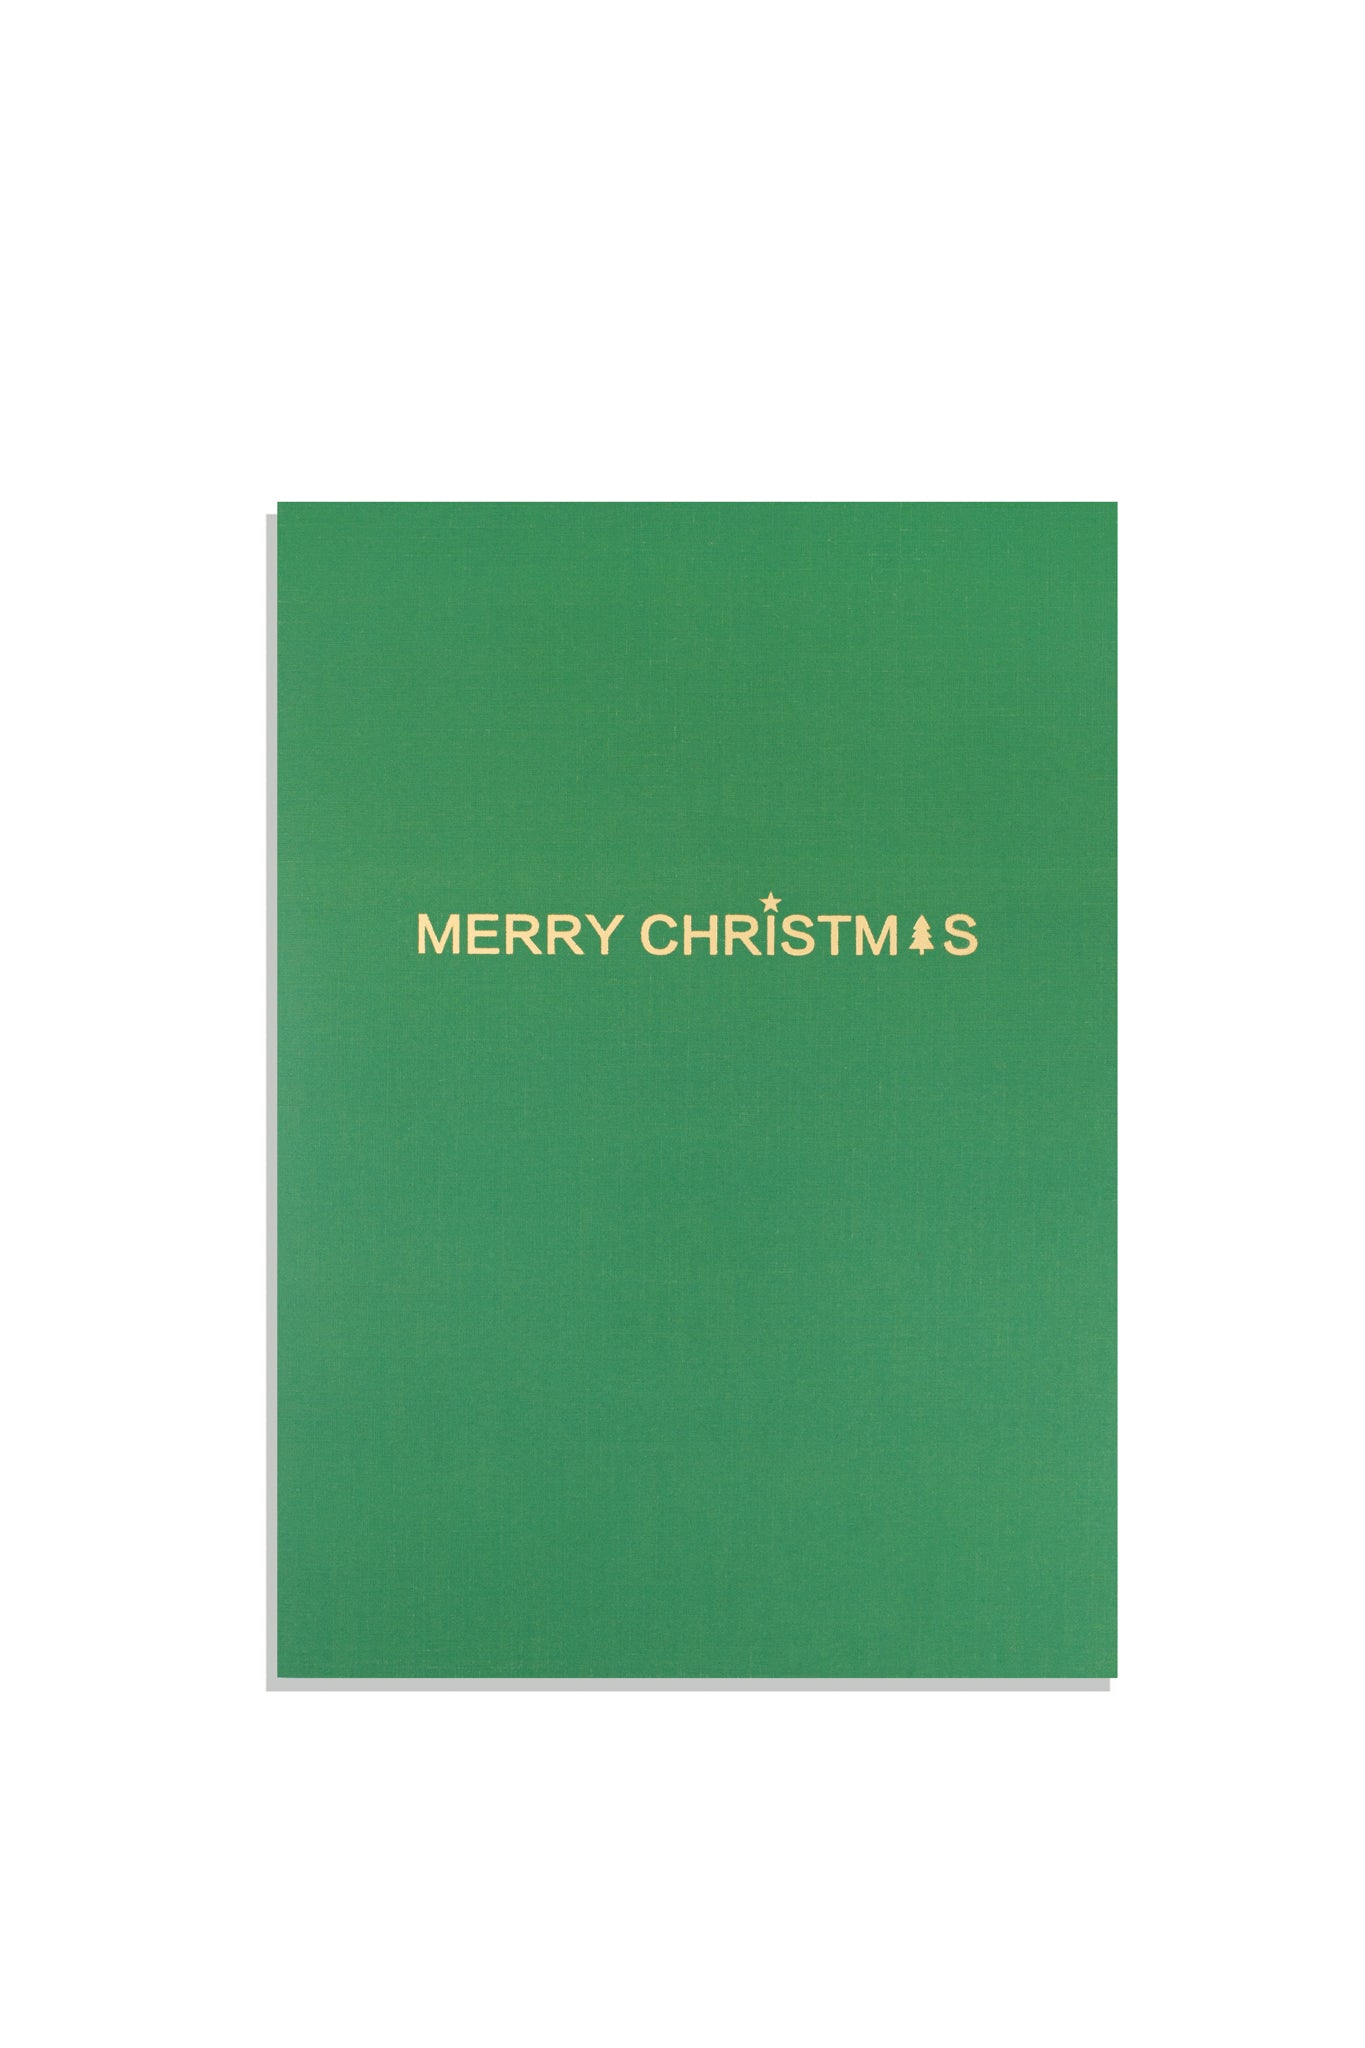 MERRY CHRISTMAS AUDIO GREETINGS CARD